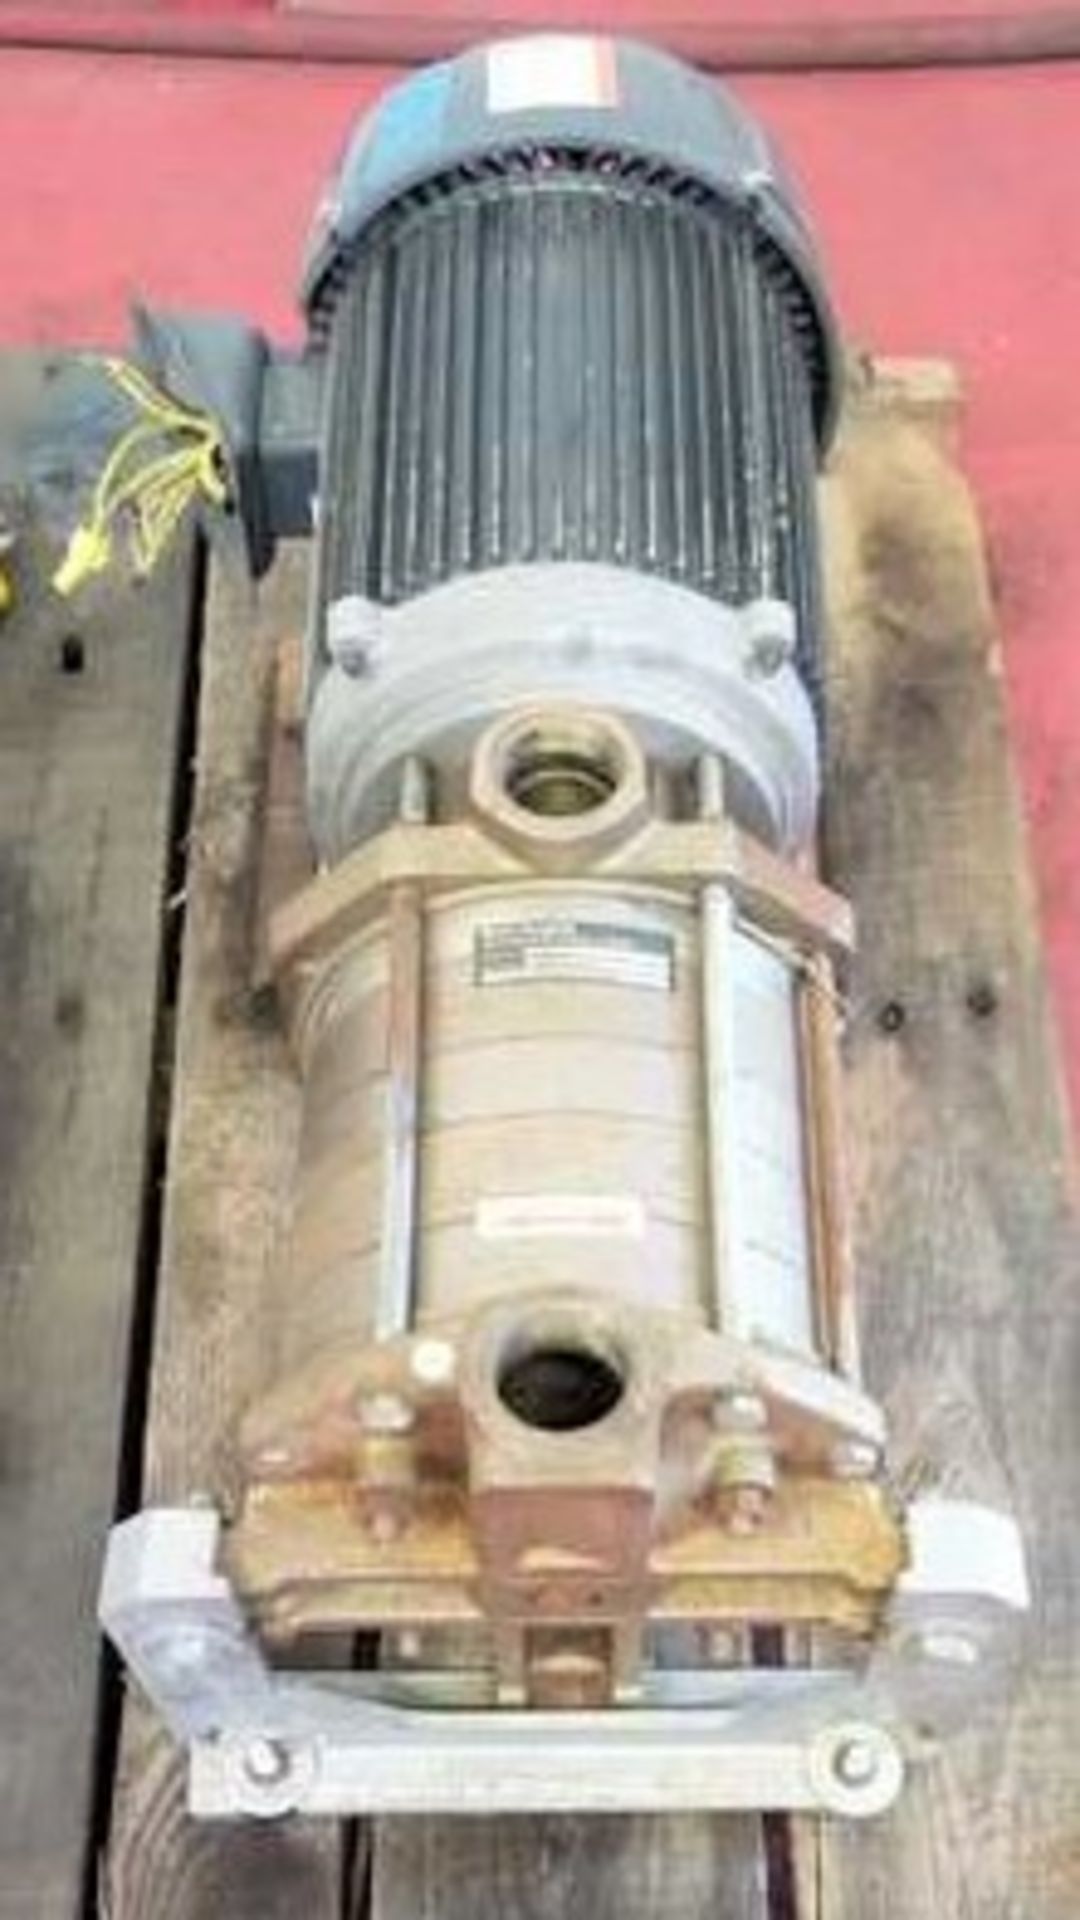 MTH regenerative turbine pump for low flow high pressure pumping. Standard construction if hard